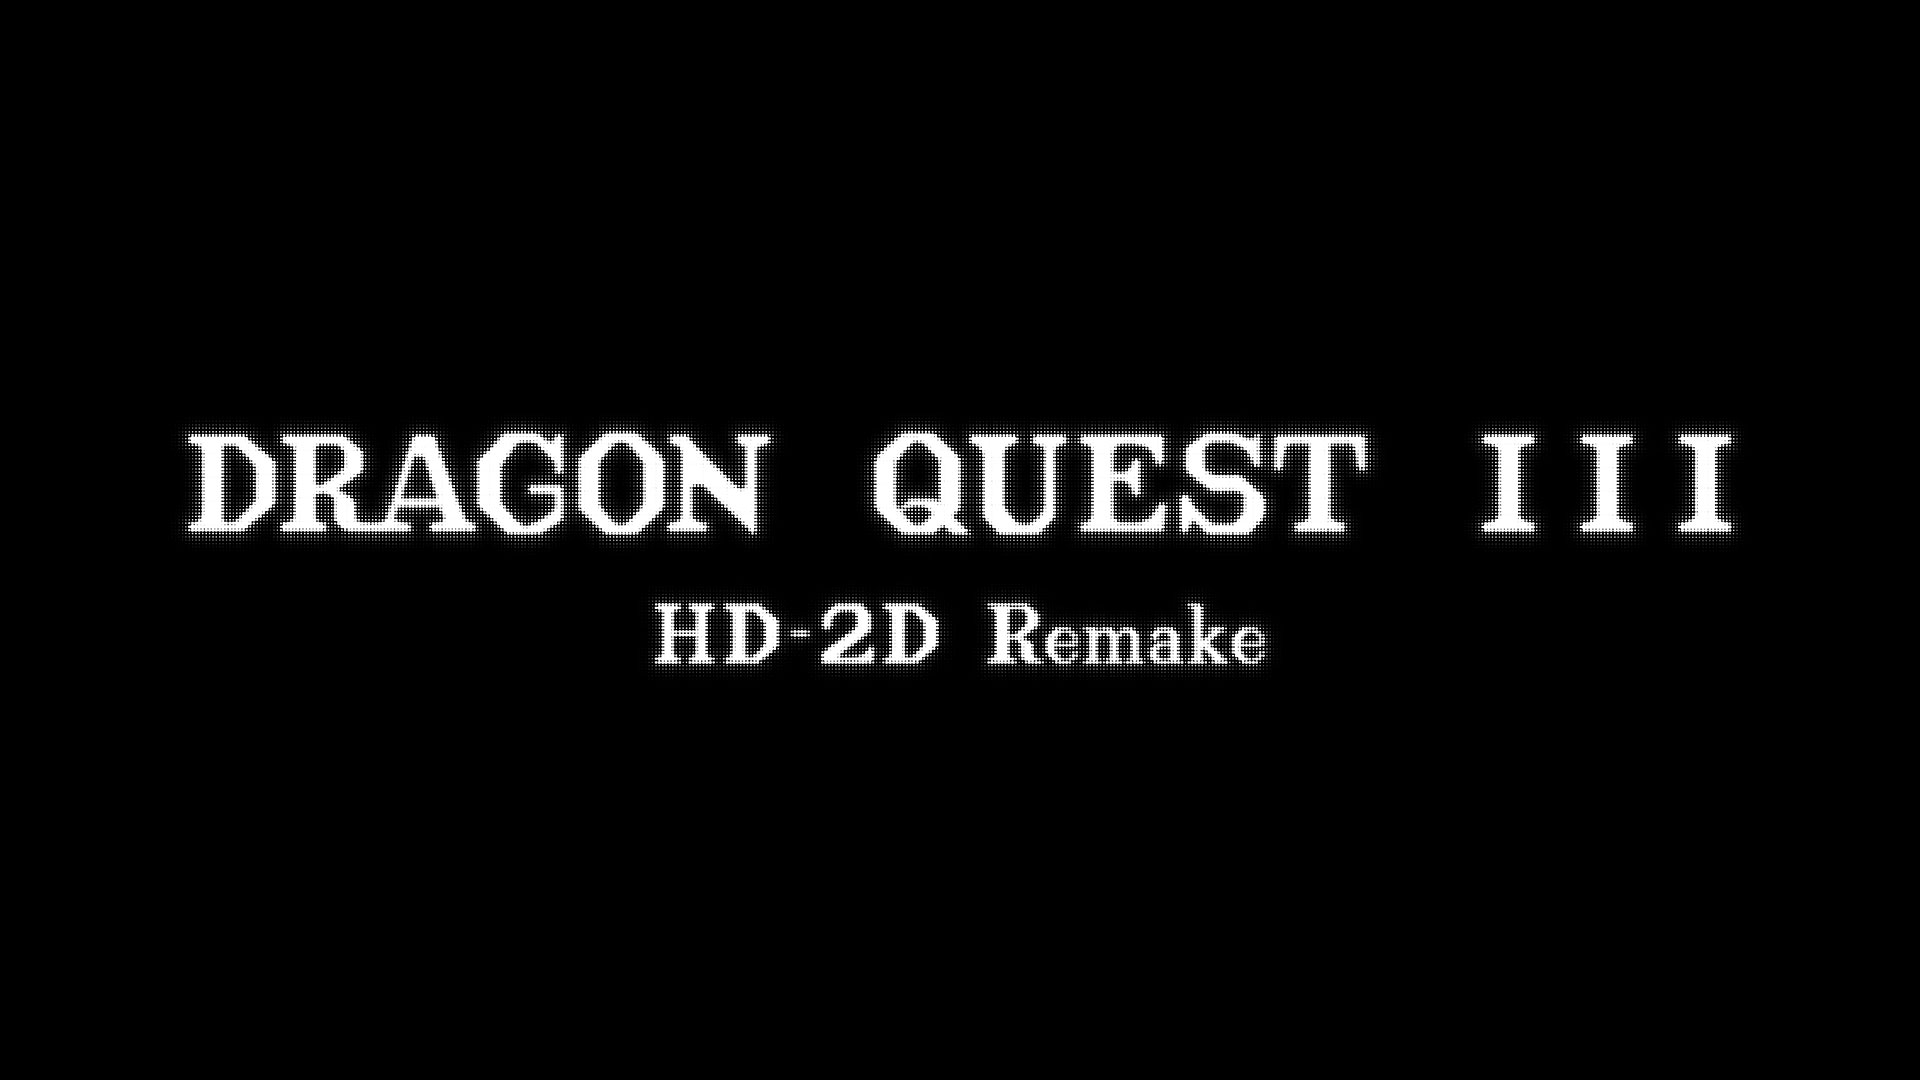 DRAGON QUEST III HD-2D Remake